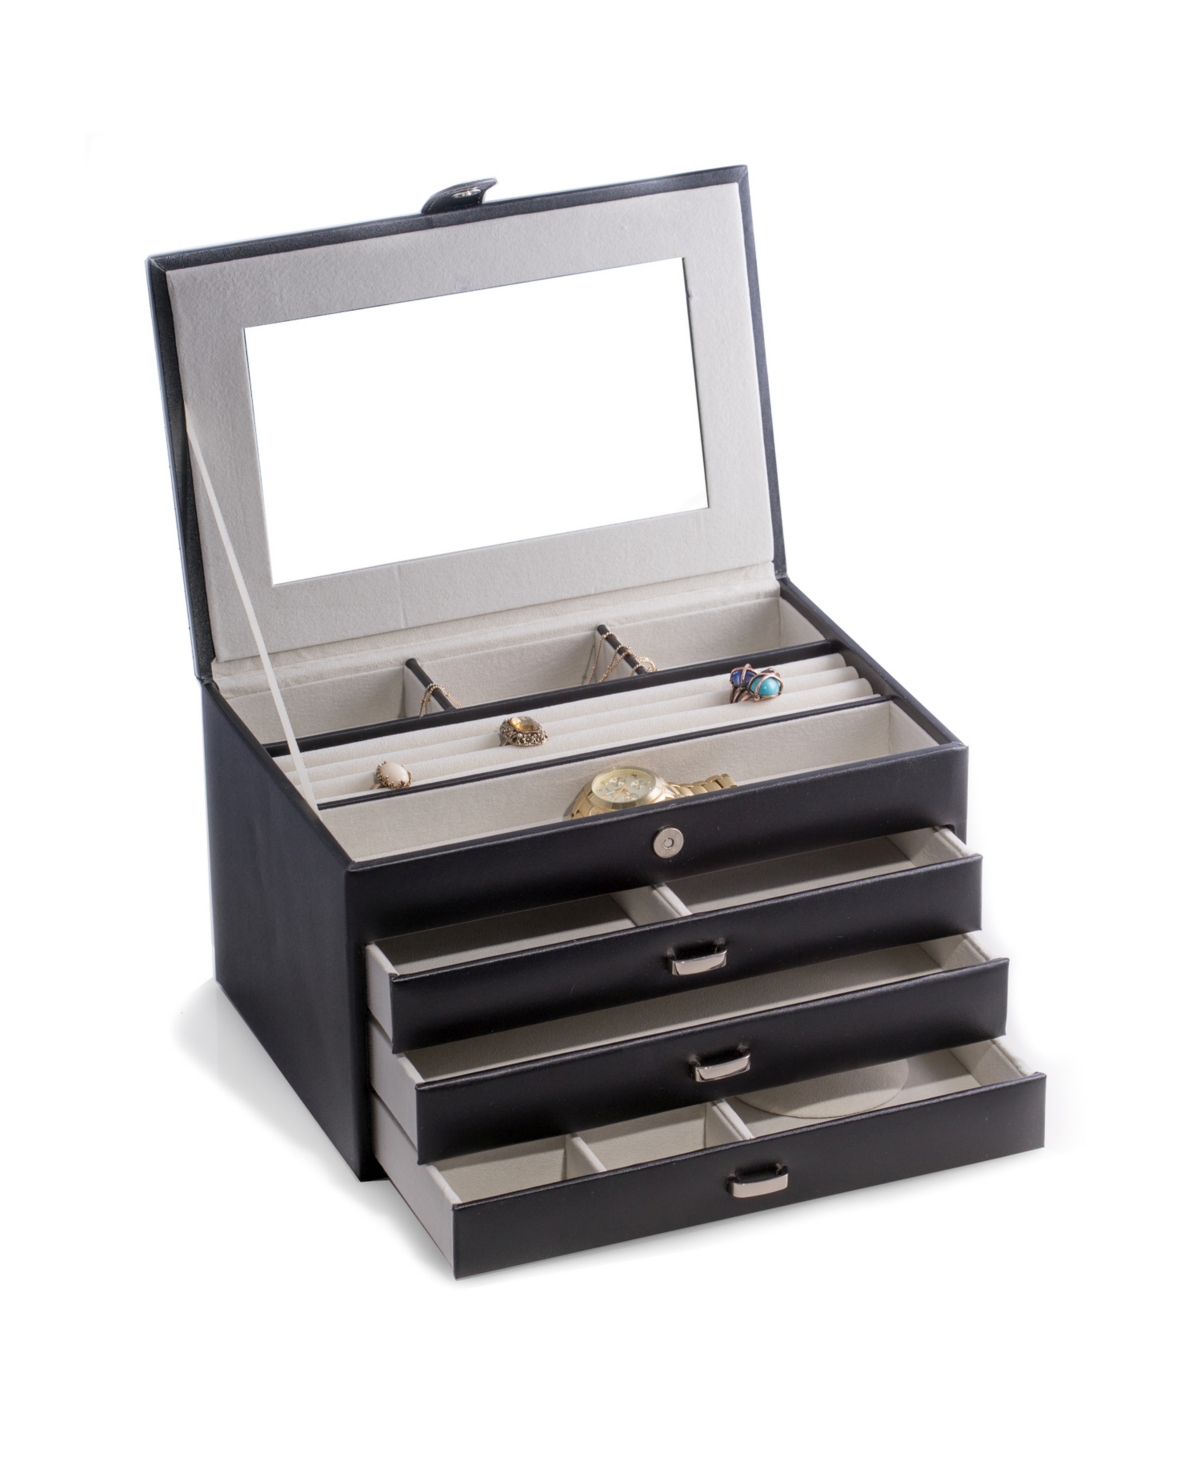 4 Level Jewelry Box with Multi Compartments - Multi